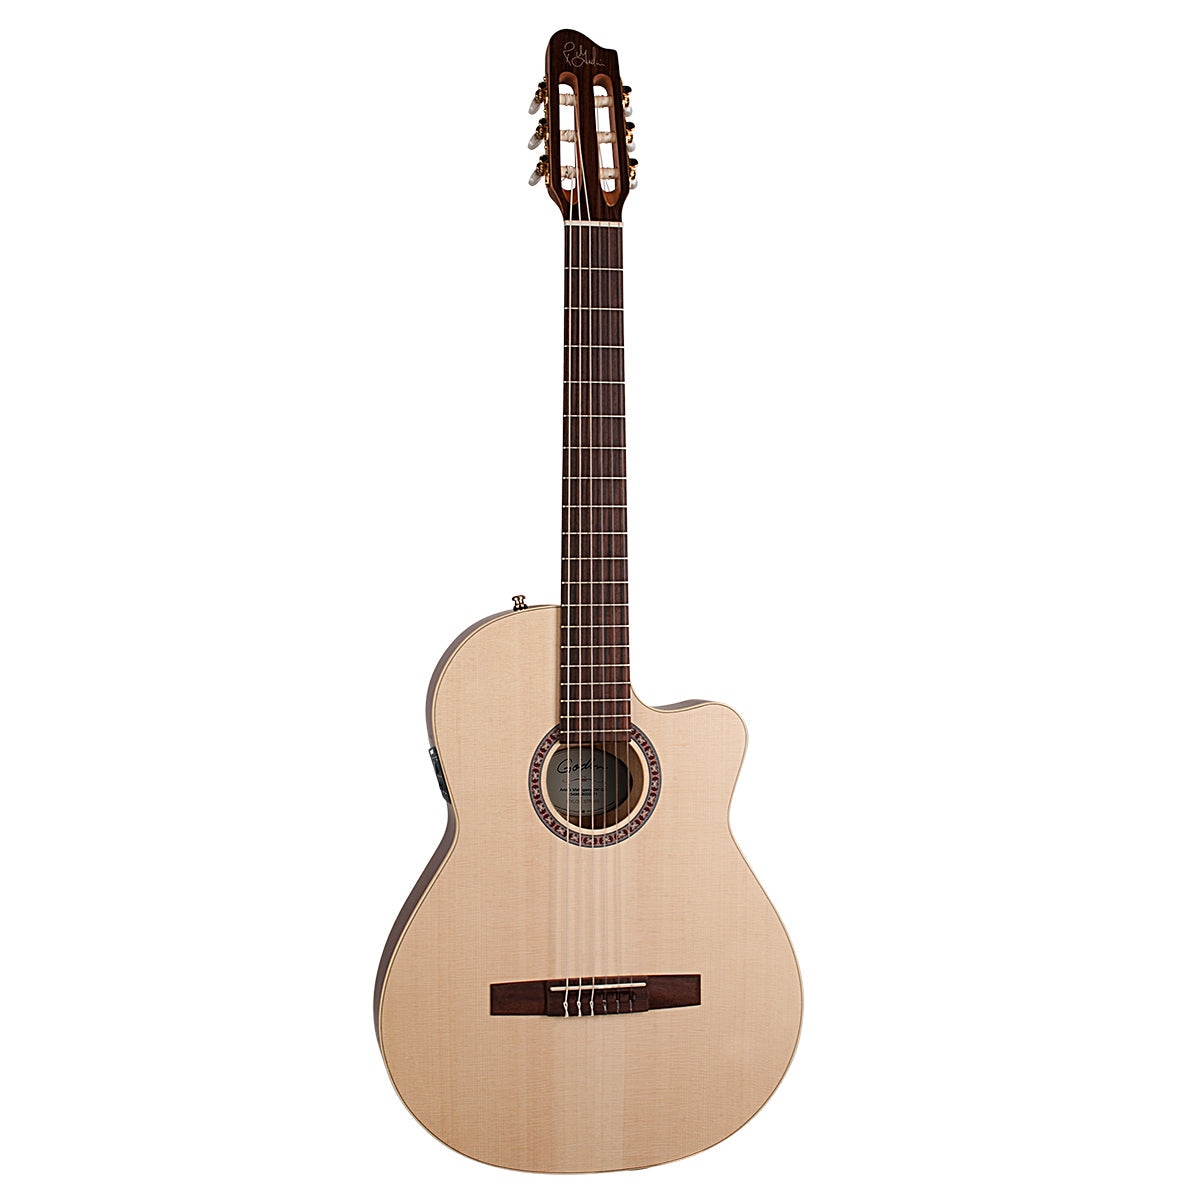 Godin Arena Cutaway Clasica II Nylon String Electro Guitar,  for sale at Richards Guitars.